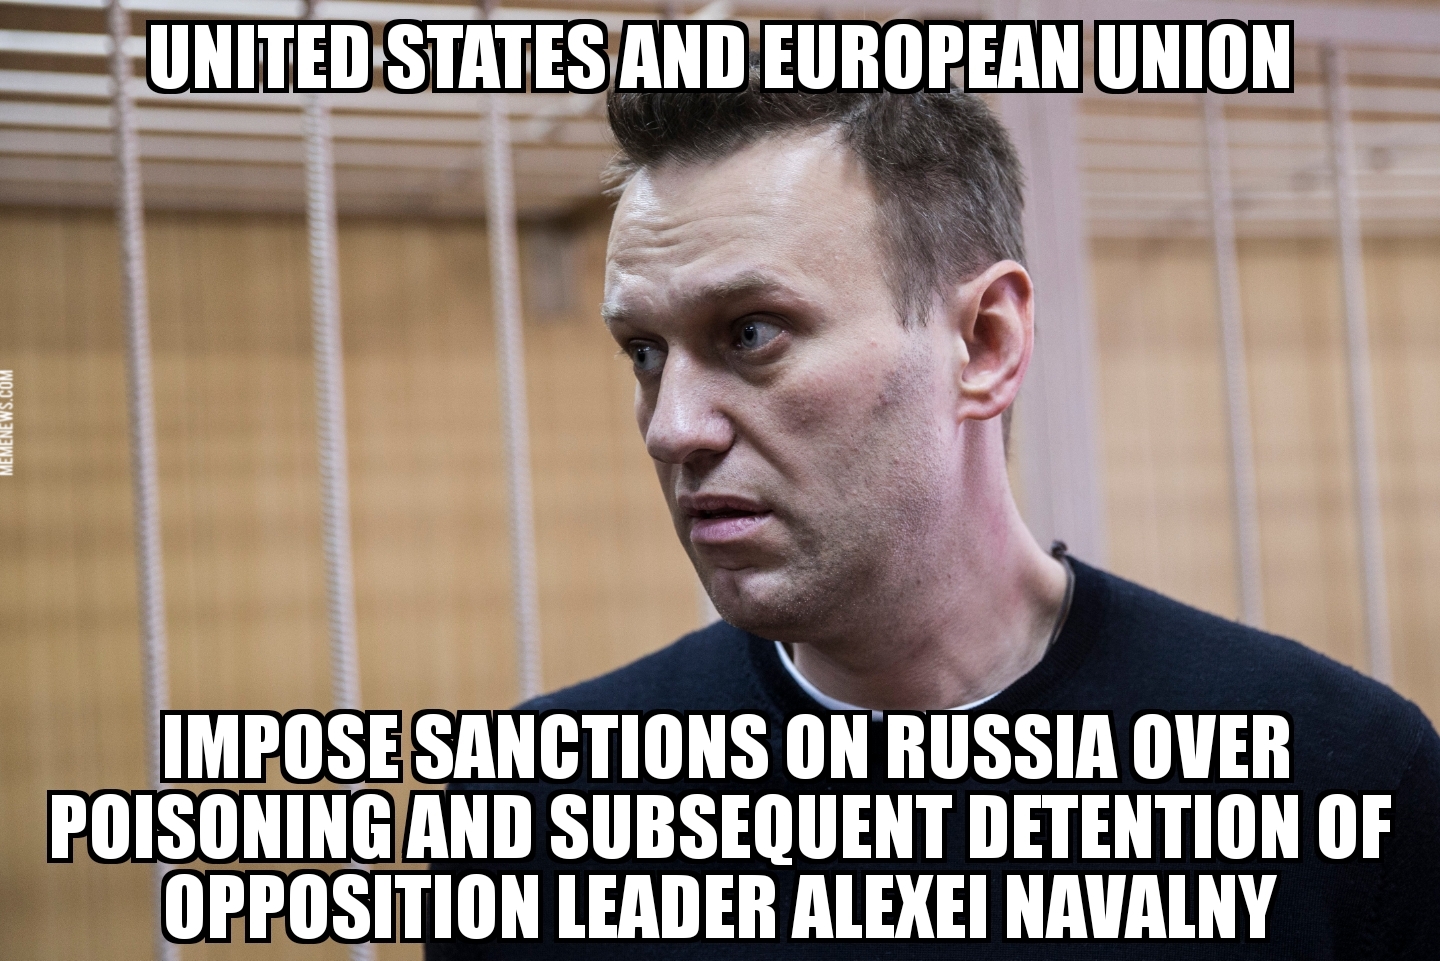 U.S. and E.U. sanction Russia over Alexei Navalny